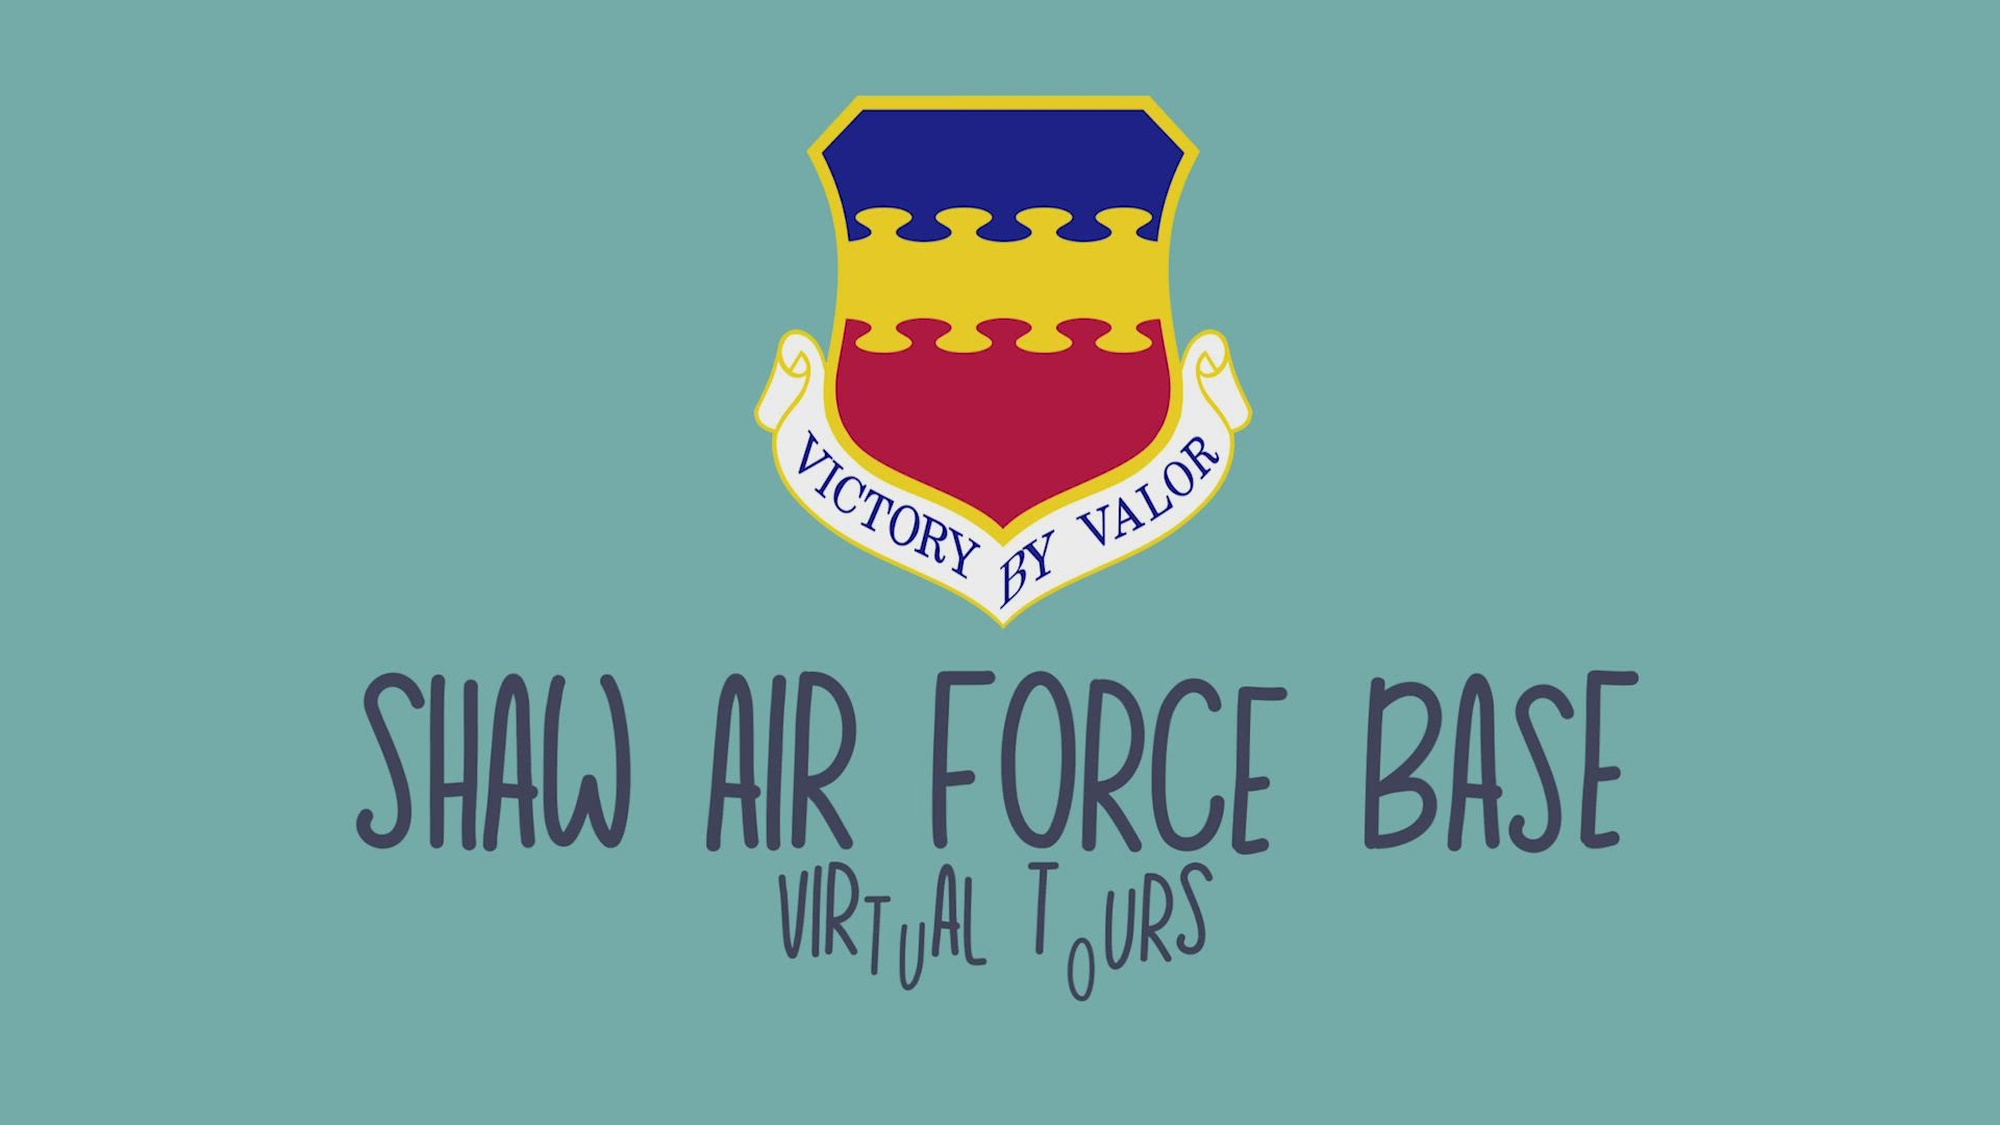 A video showcasing the 20th RAPCON as part of the Shaw Air Force Base Virtual Tour series.